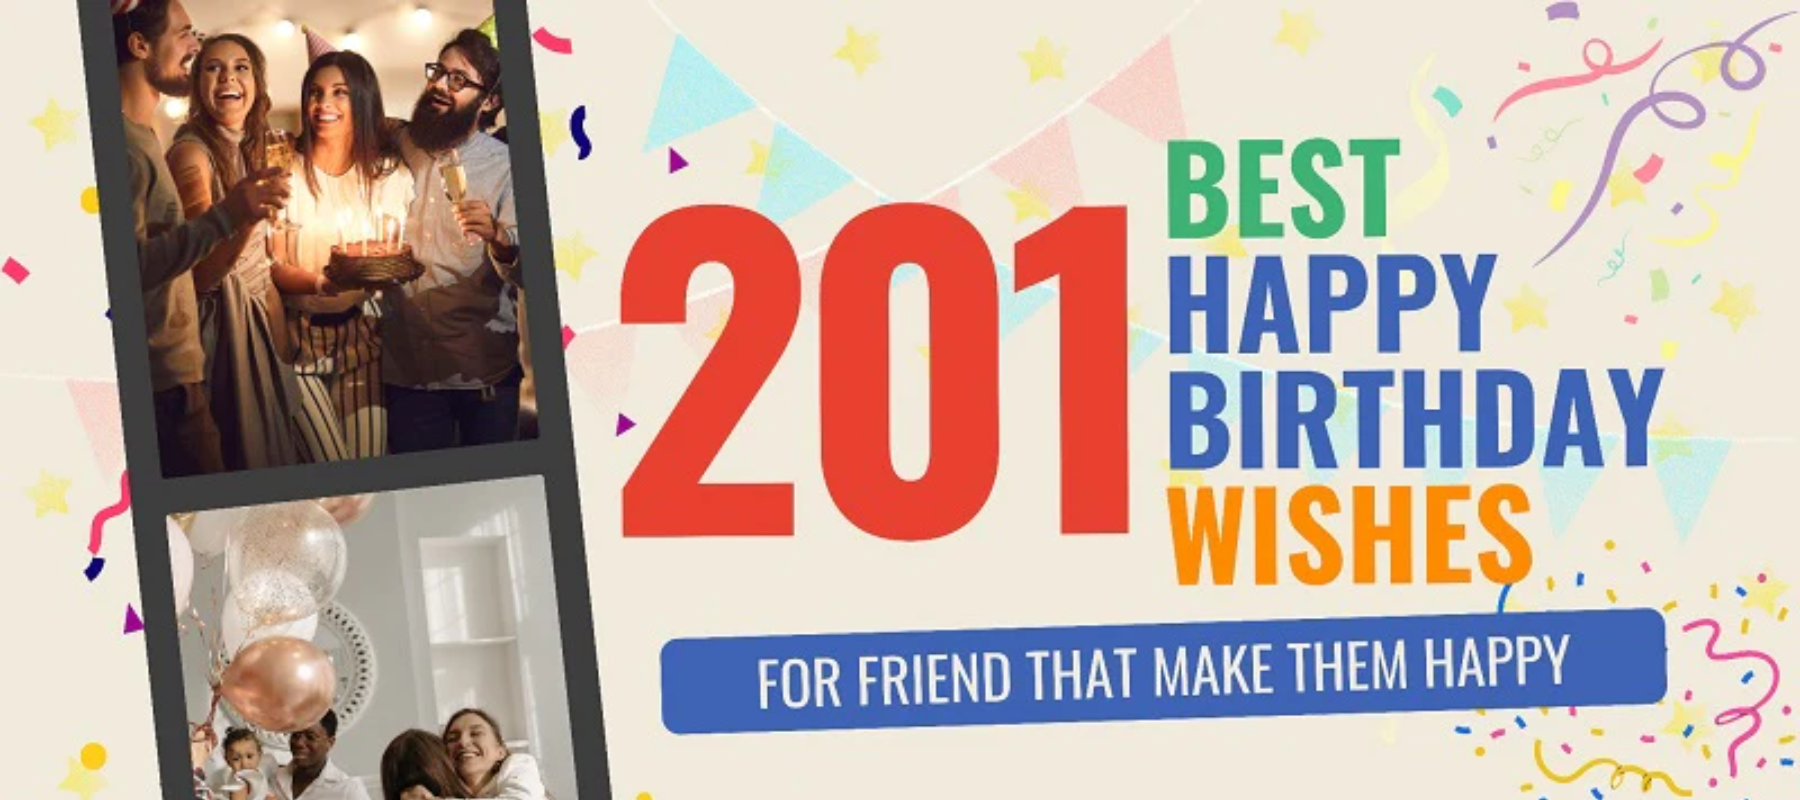 201 best happy birthday wishes for friend that make them happy